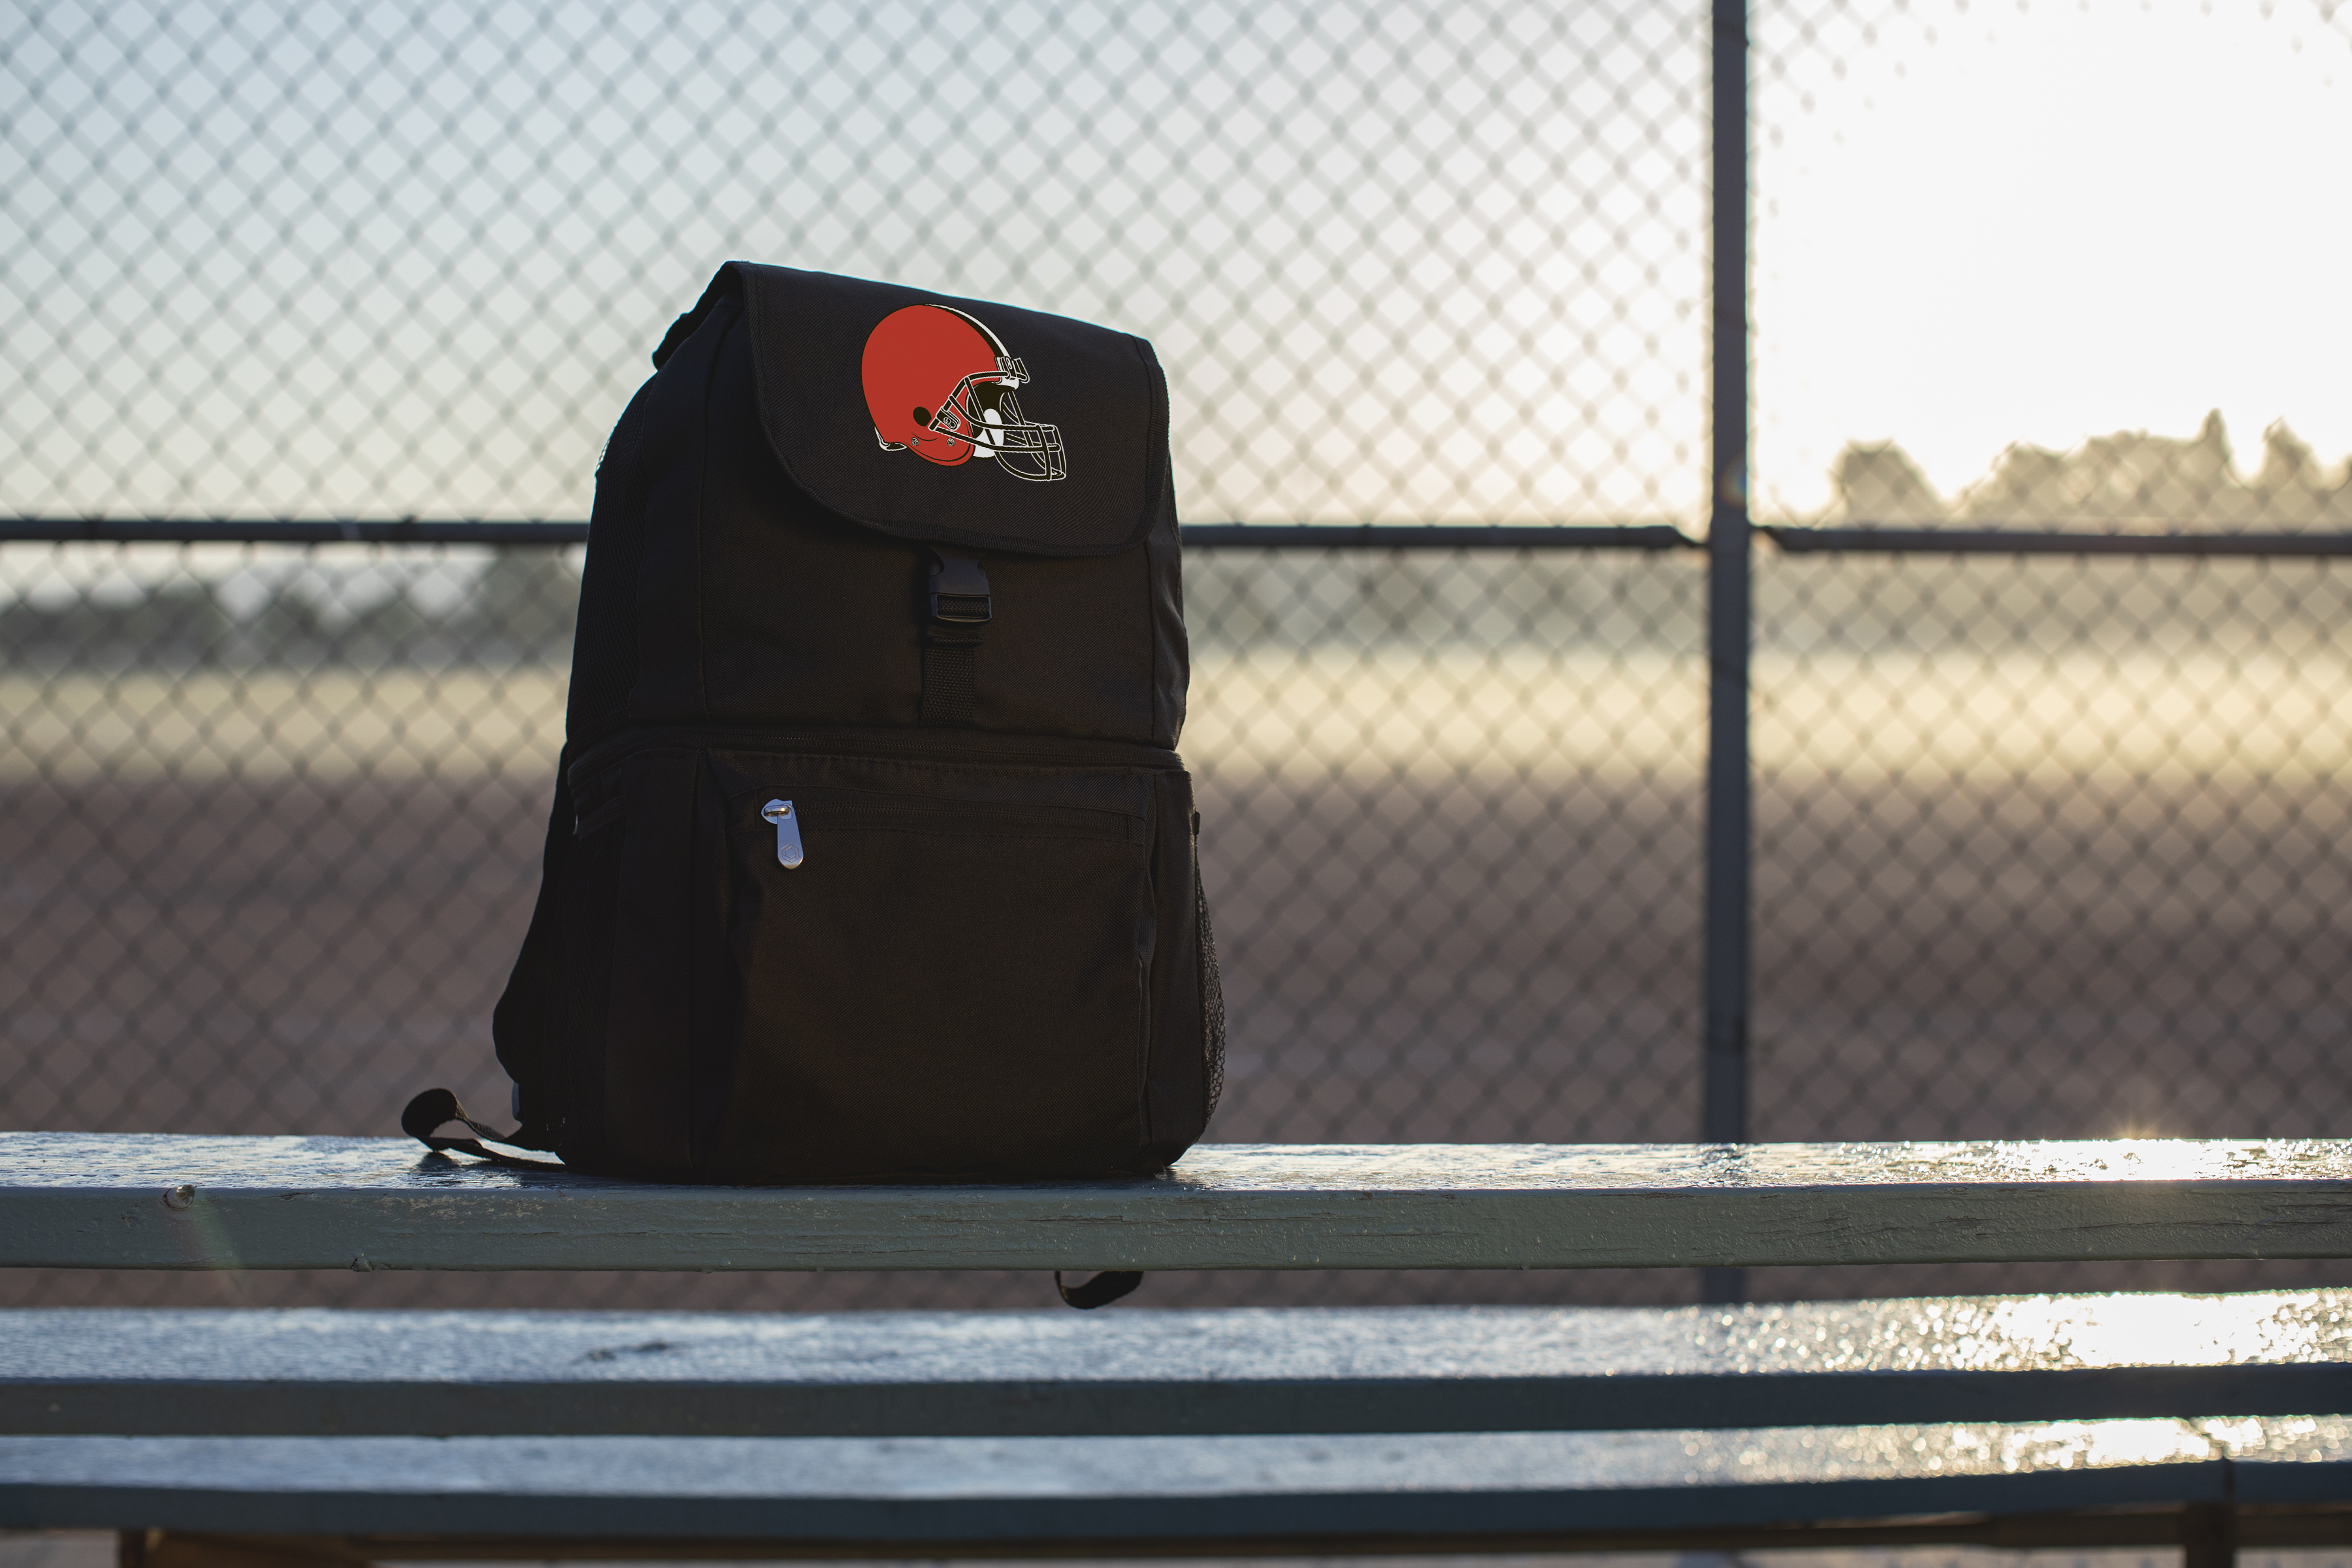 Cleveland Browns - Zuma Backpack Cooler